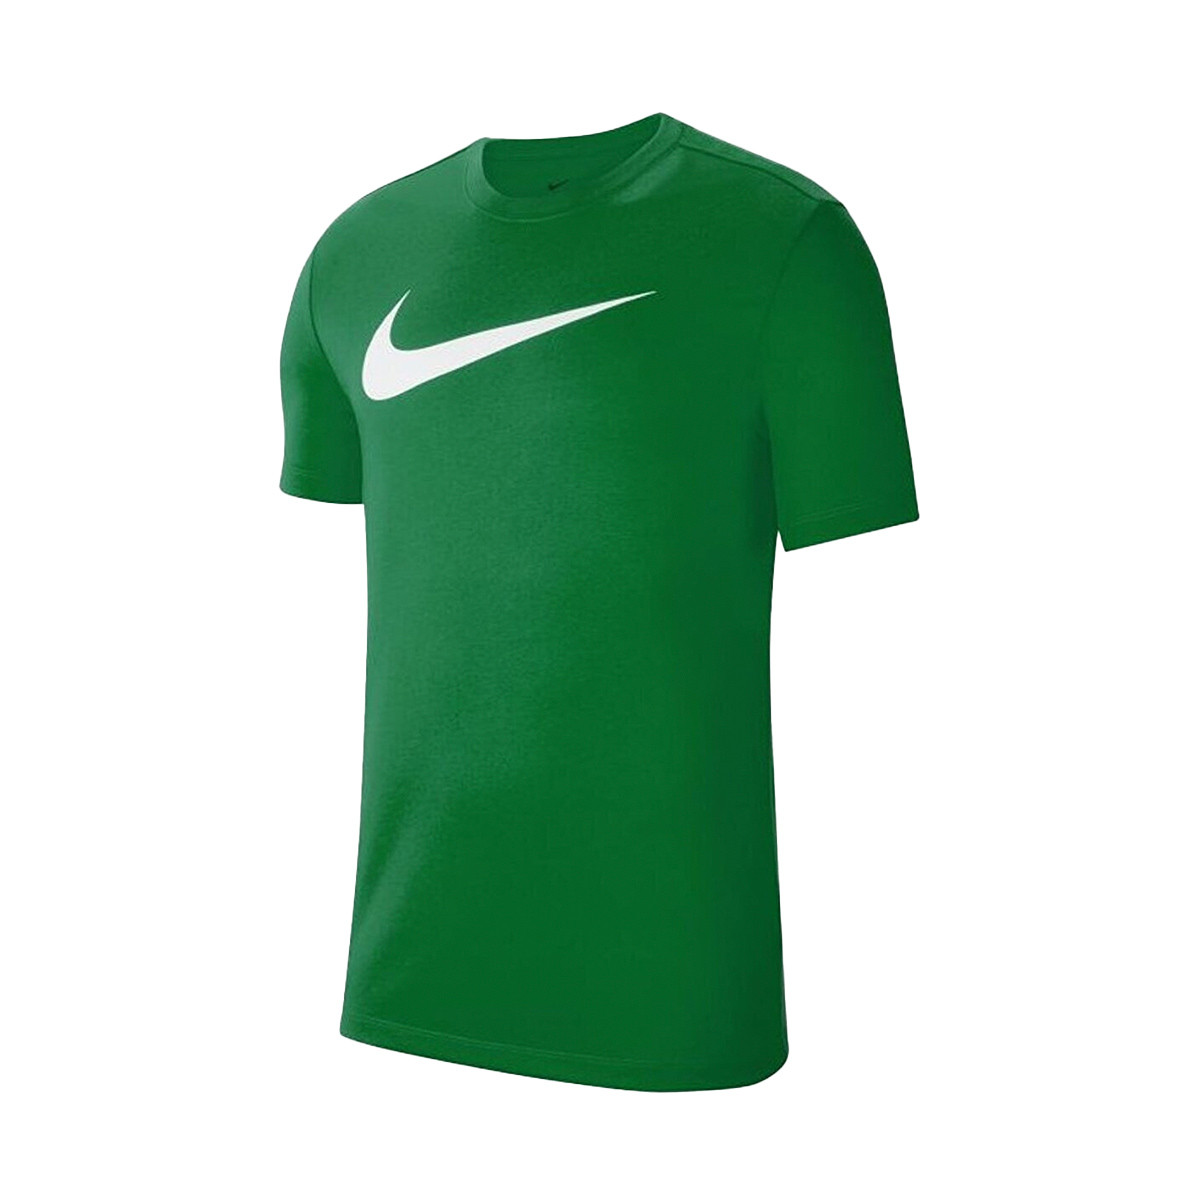 análisis Limpia el cuarto Globo Camiseta Nike Team Club 20 HBR m/c Green-White - Fútbol Emotion